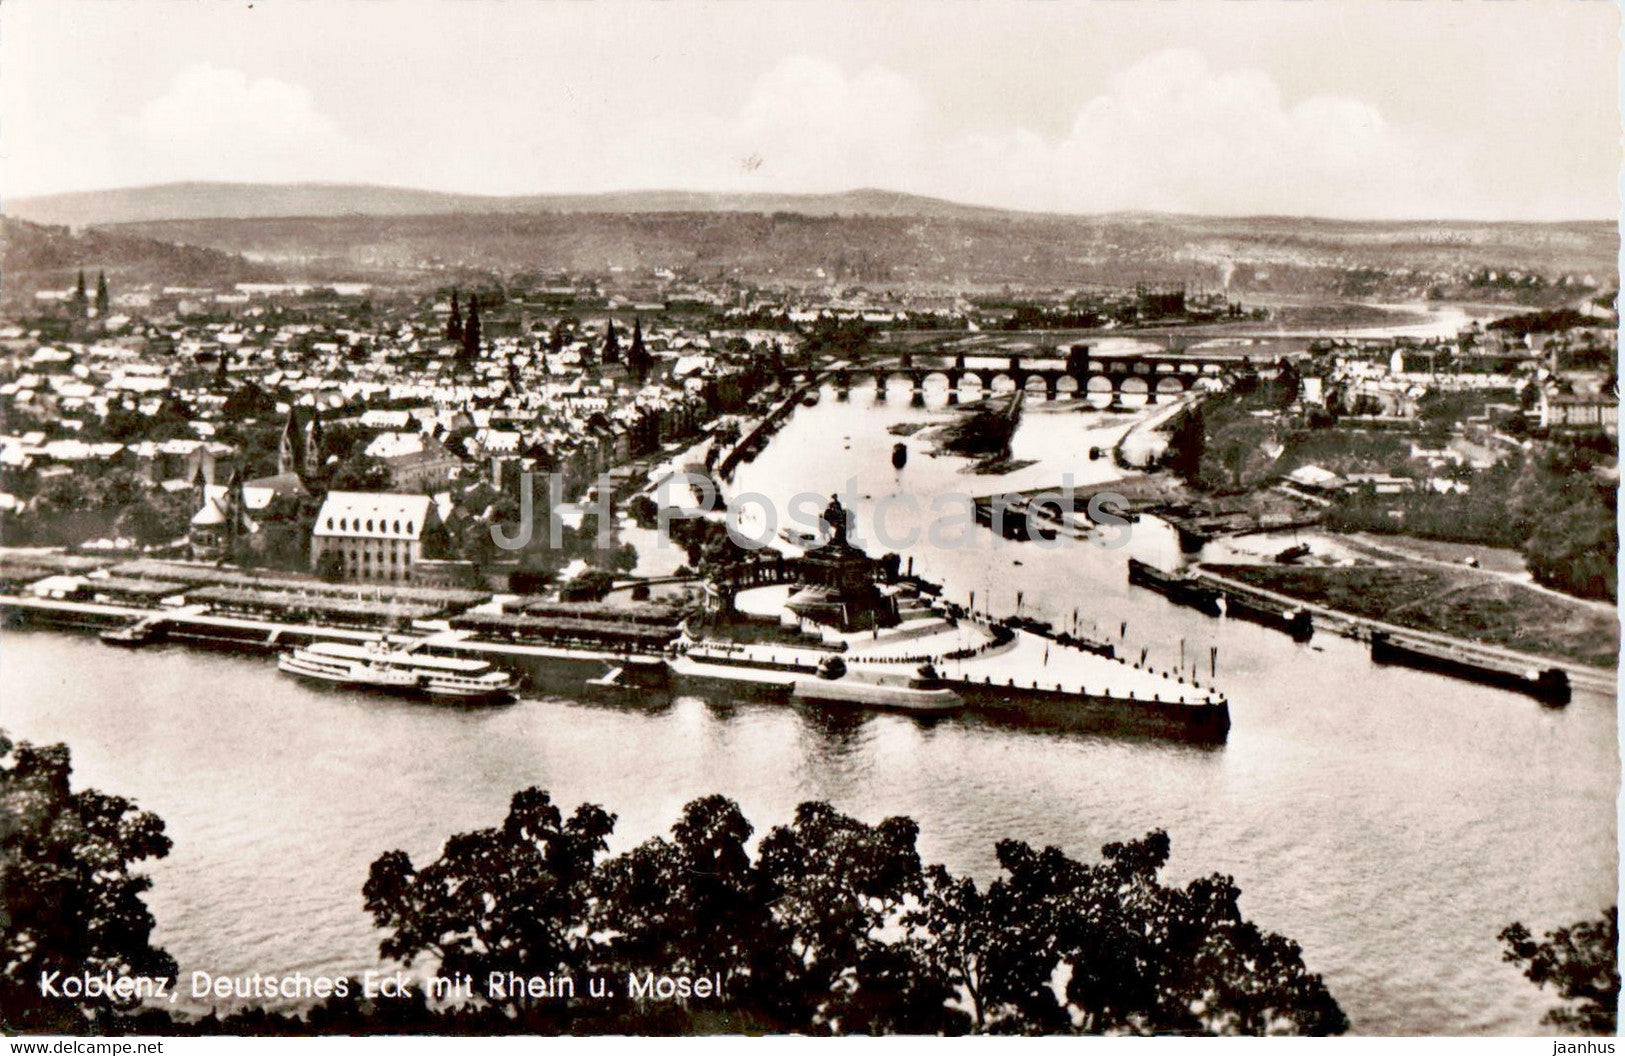 Koblenz - Deutsches Eck mit Rhein u Mosel - old postcard - Germany - unused - JH Postcards